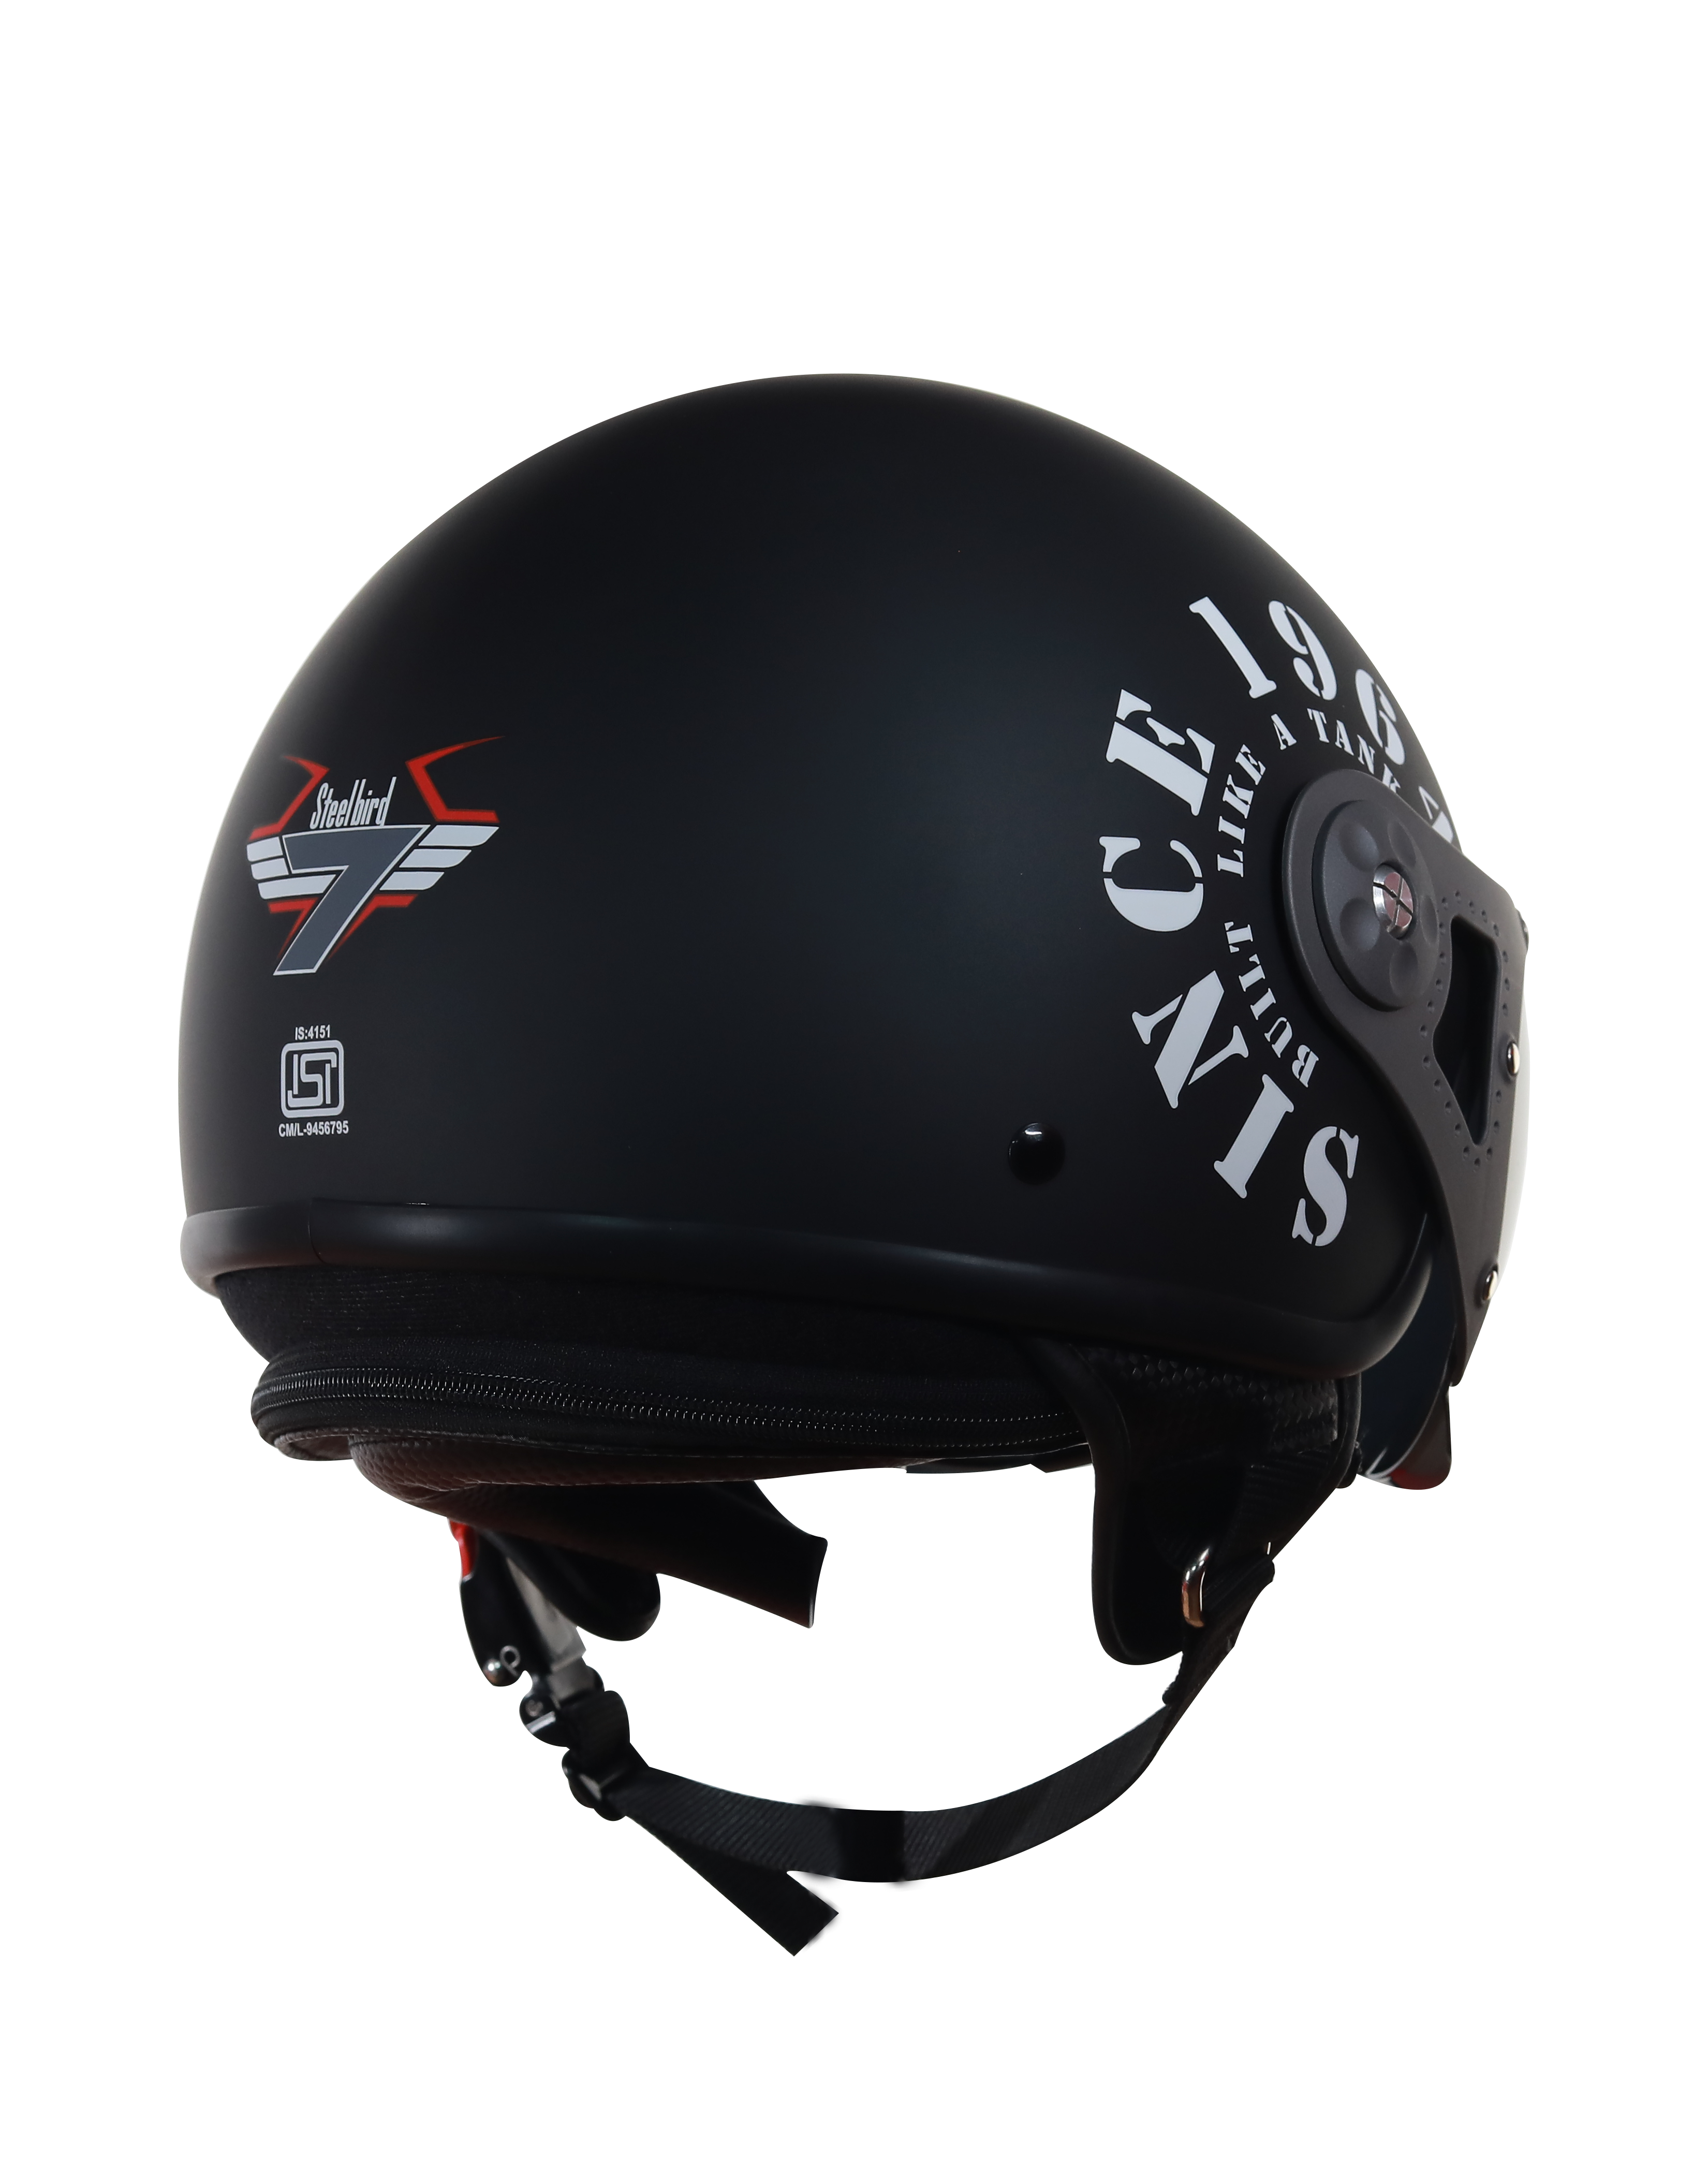 Steelbird SB-27 7Wings Tank Open Face Graphic Helmet (Matt Black Silver With Chrome Rainbow Visor)